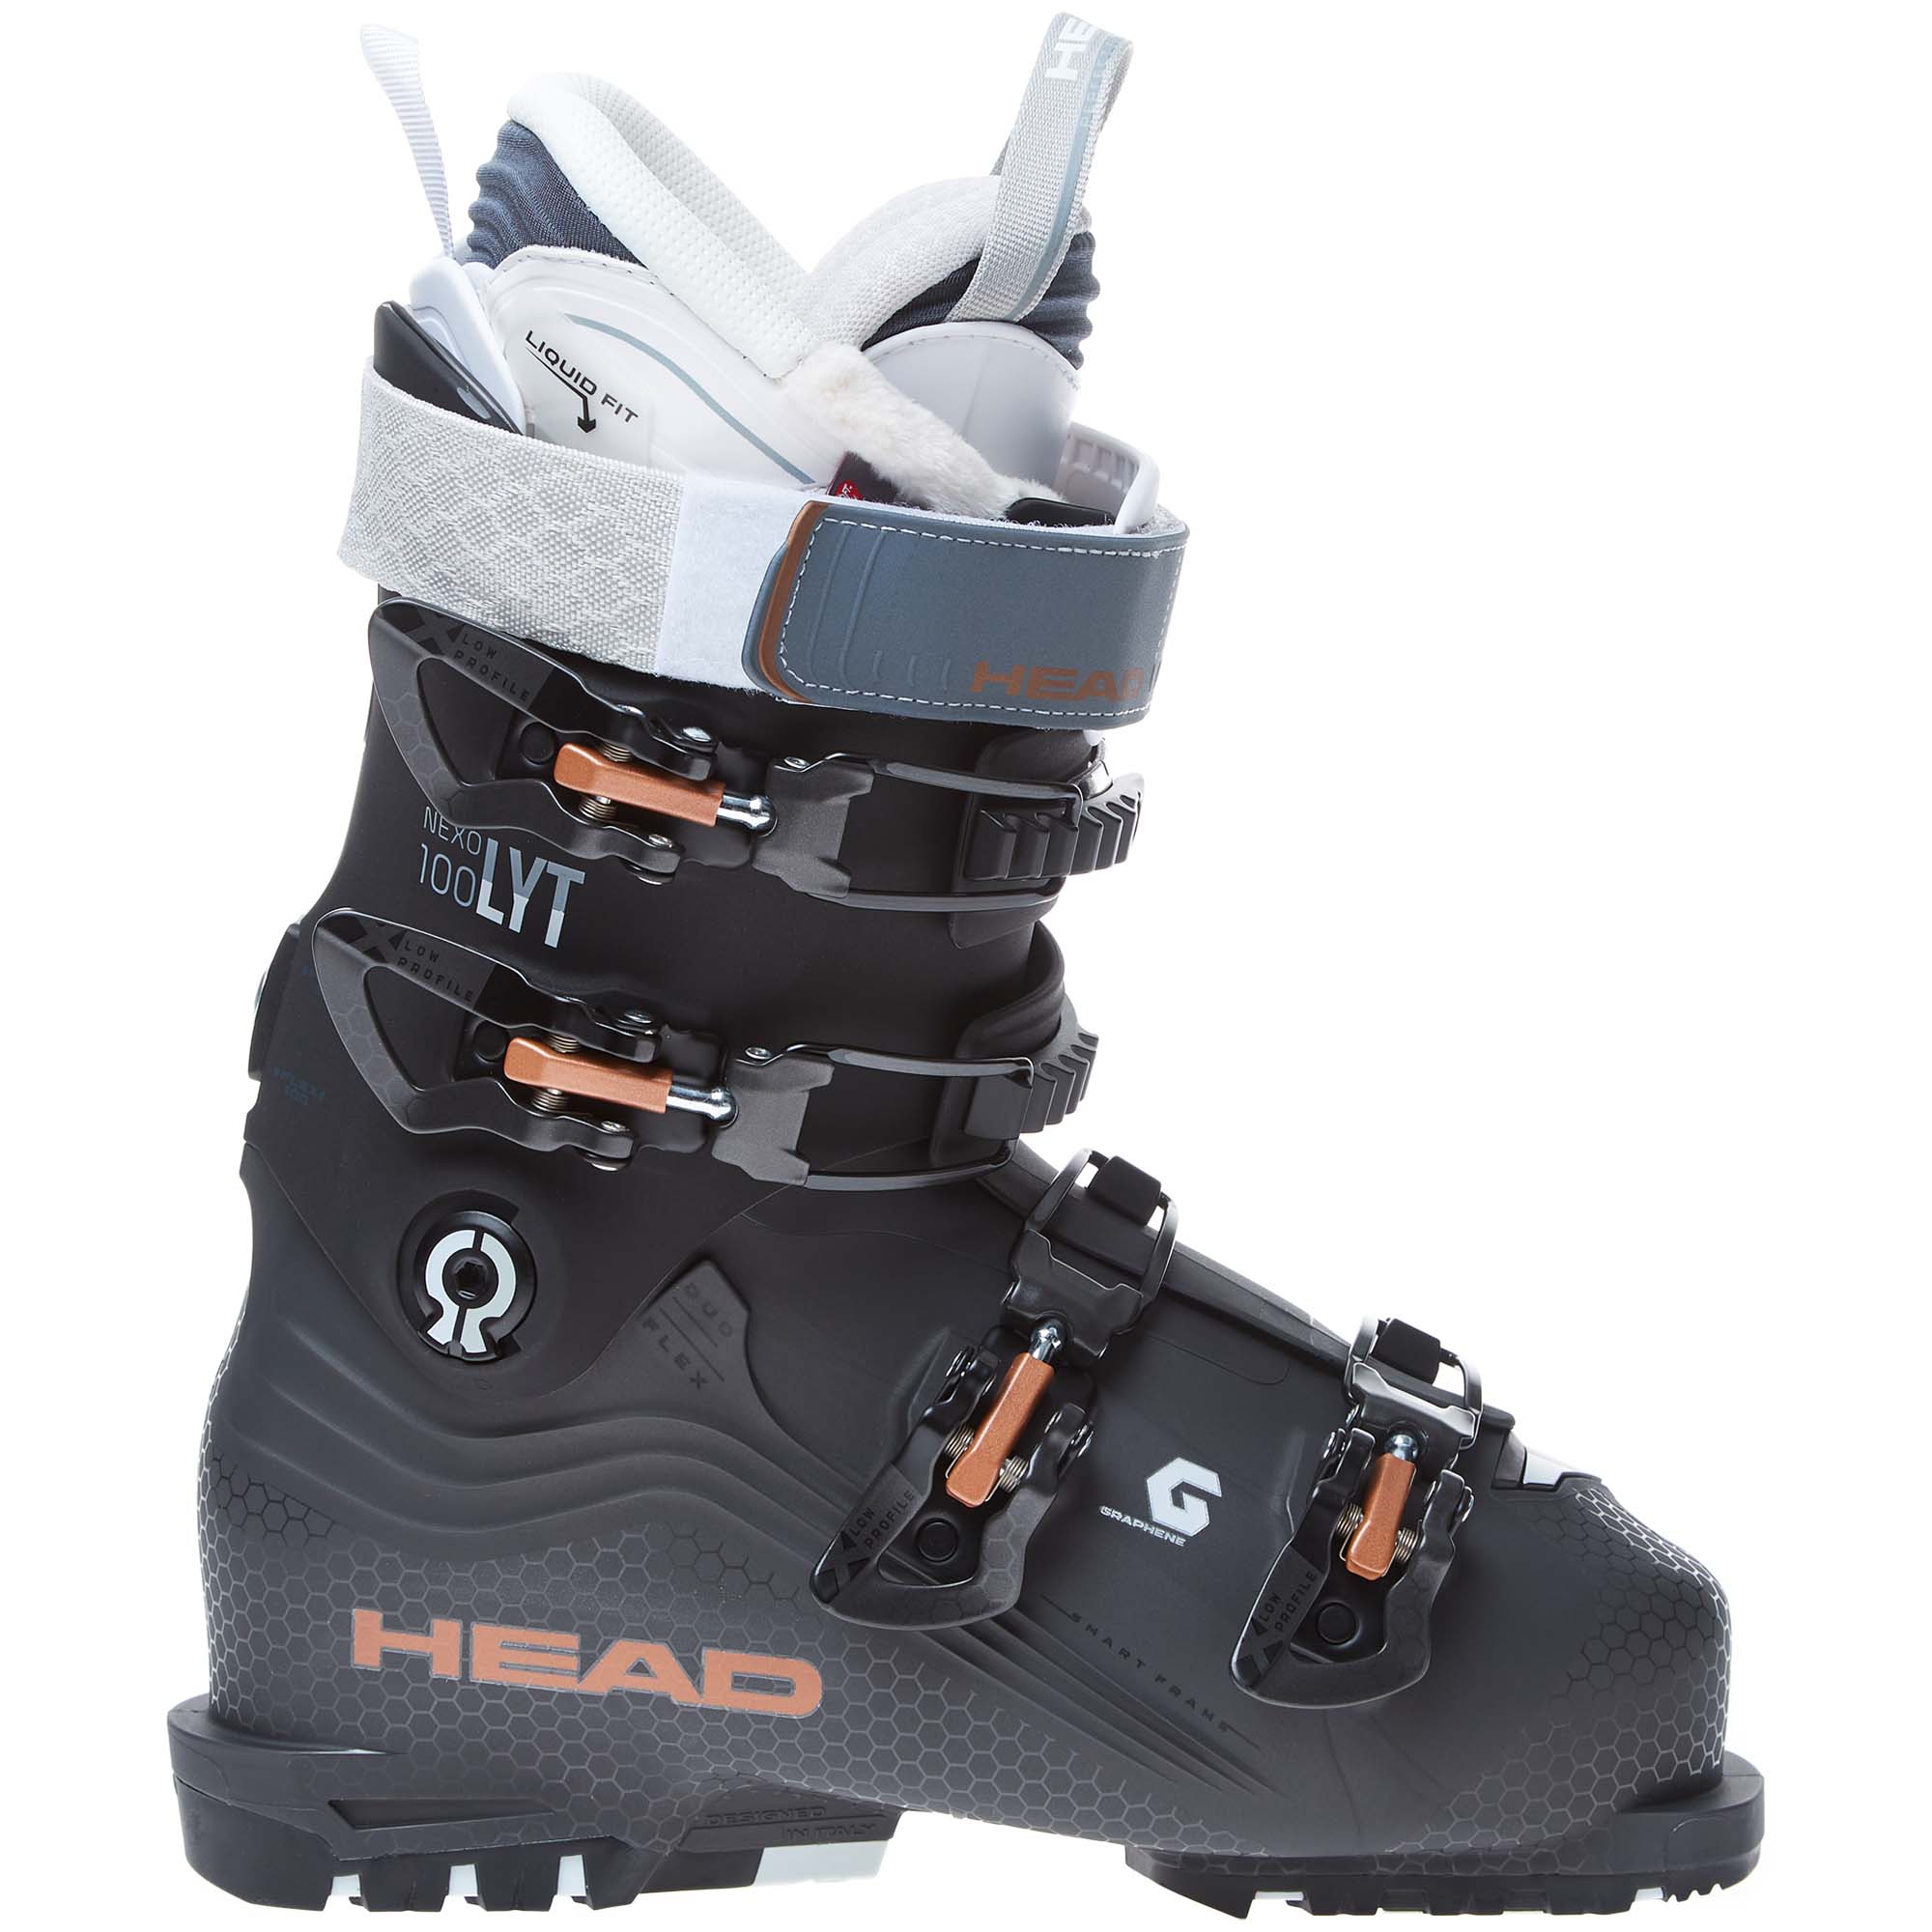 Head Nexo Lyt 100 W GW Women's GripWalk Ski Boots